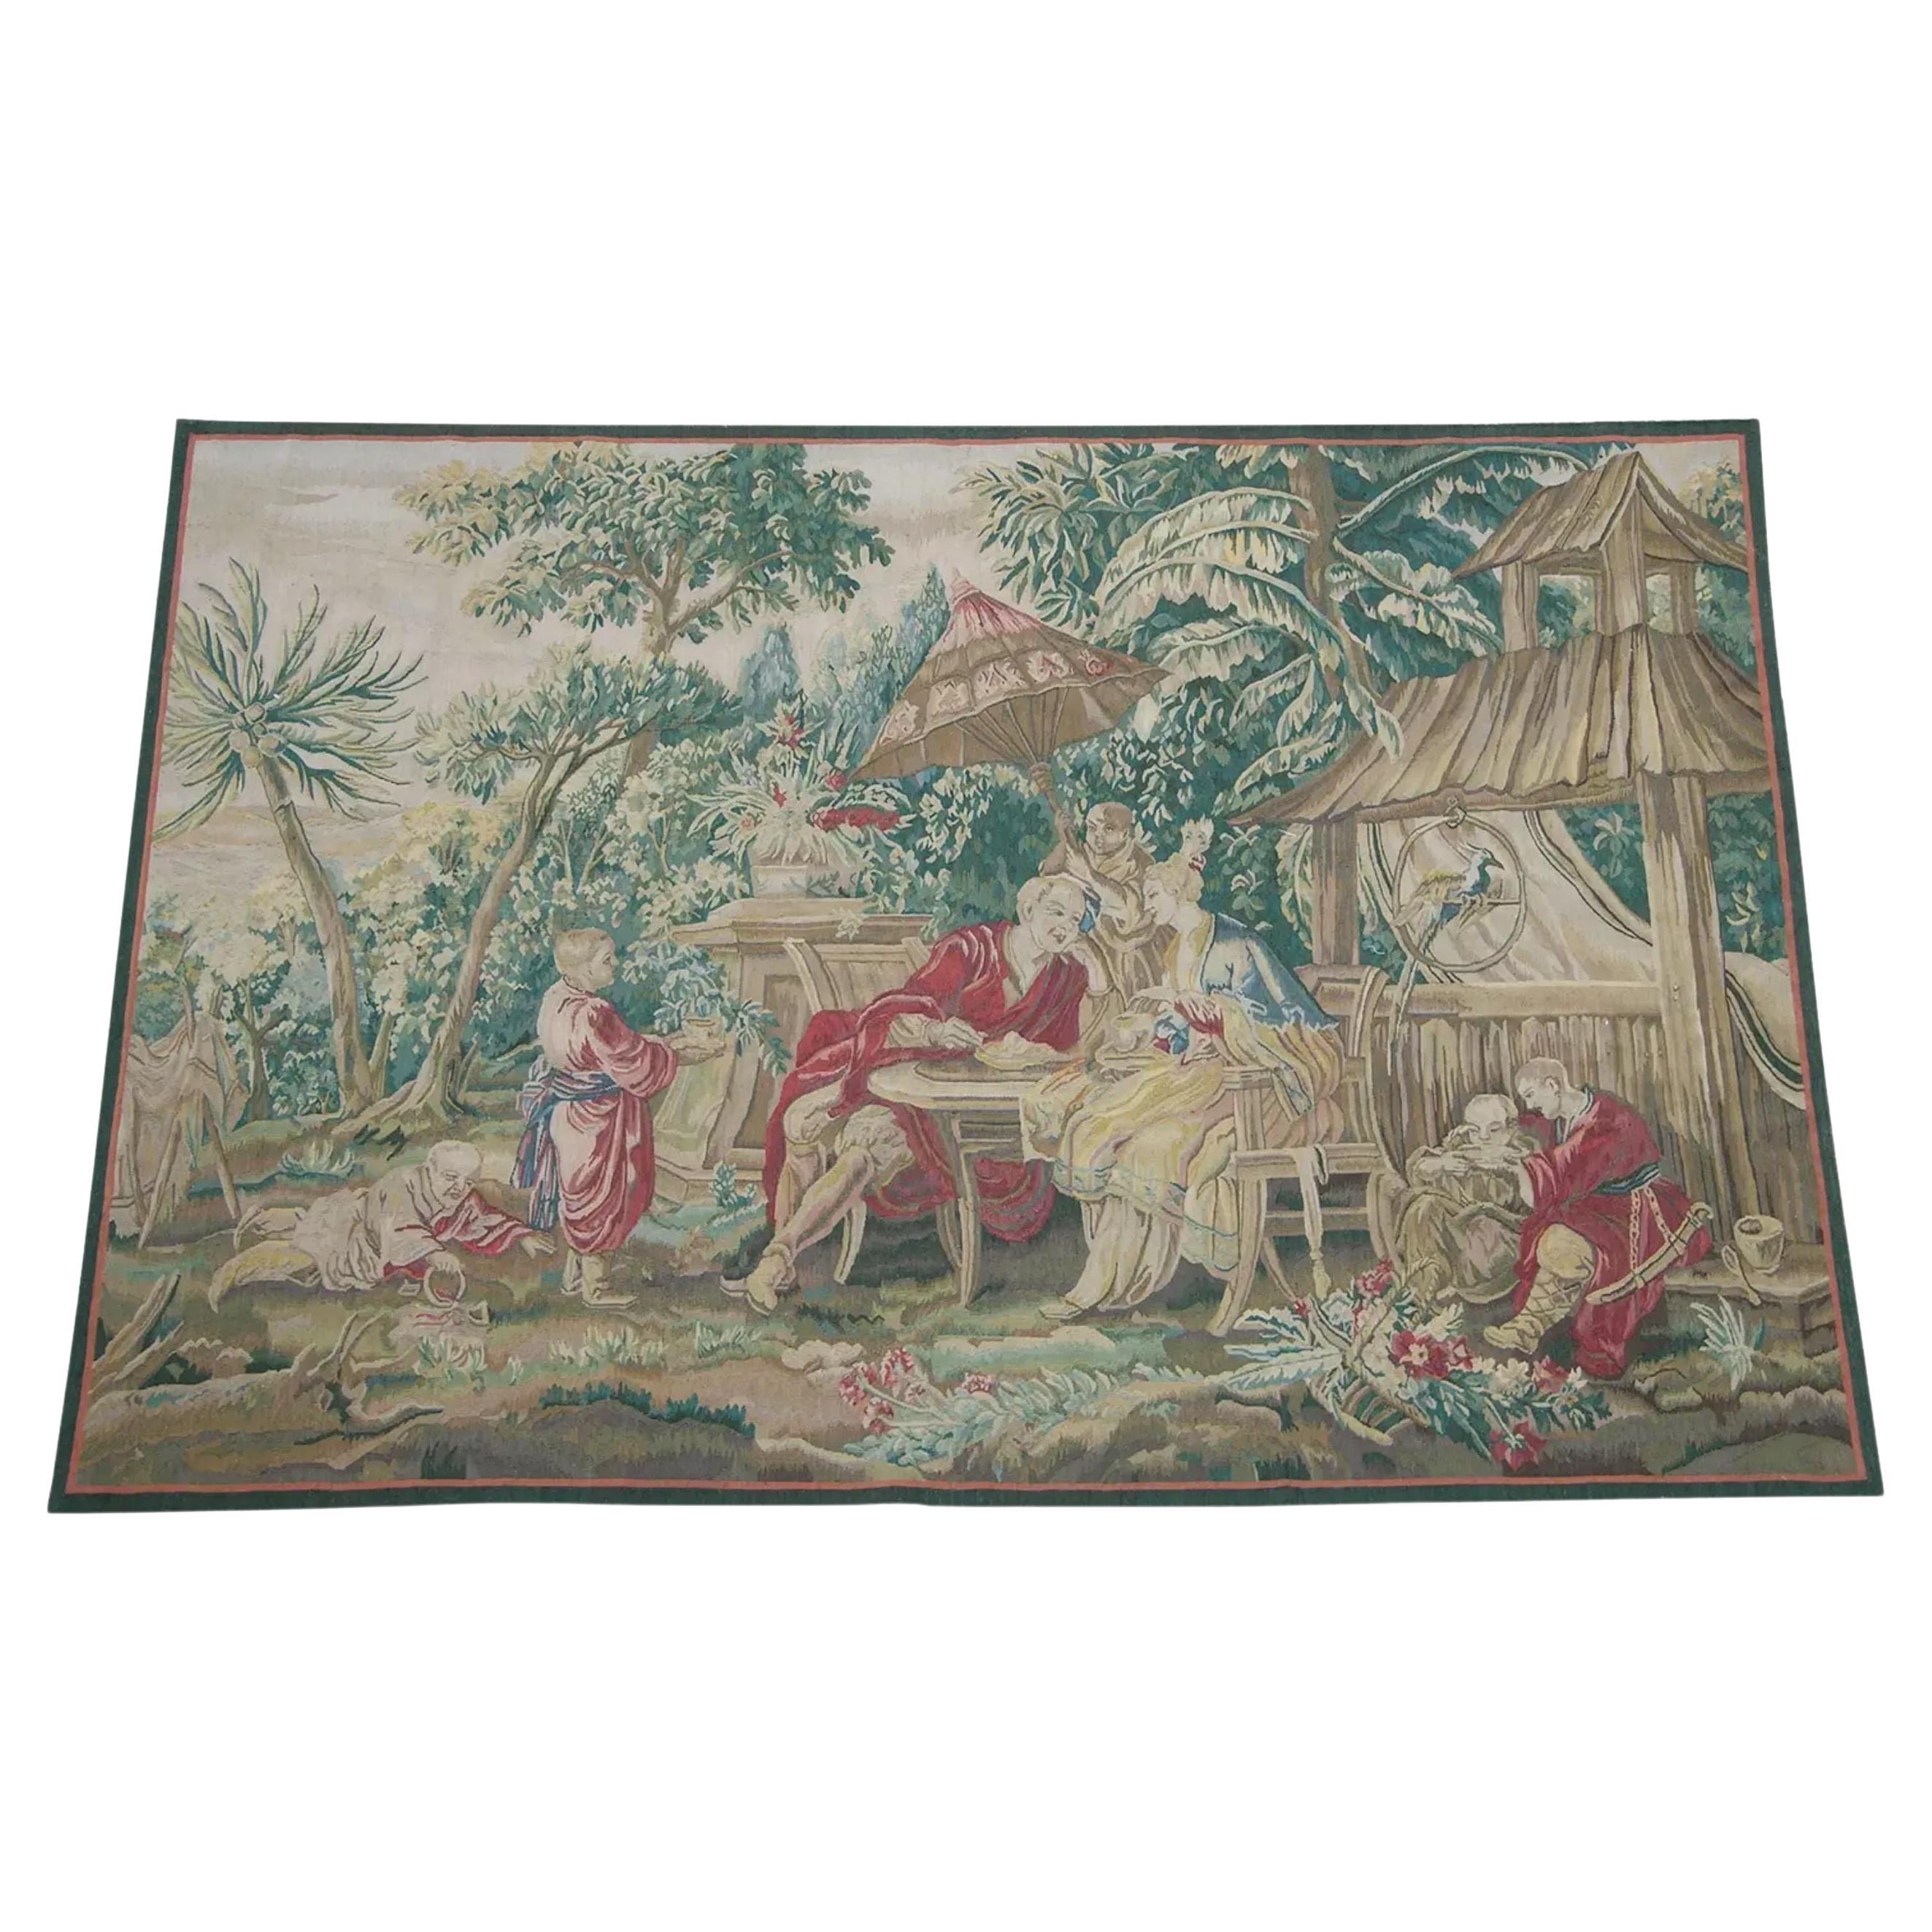 Vintage Tapestry Depicting Royalty 7.2X5.4